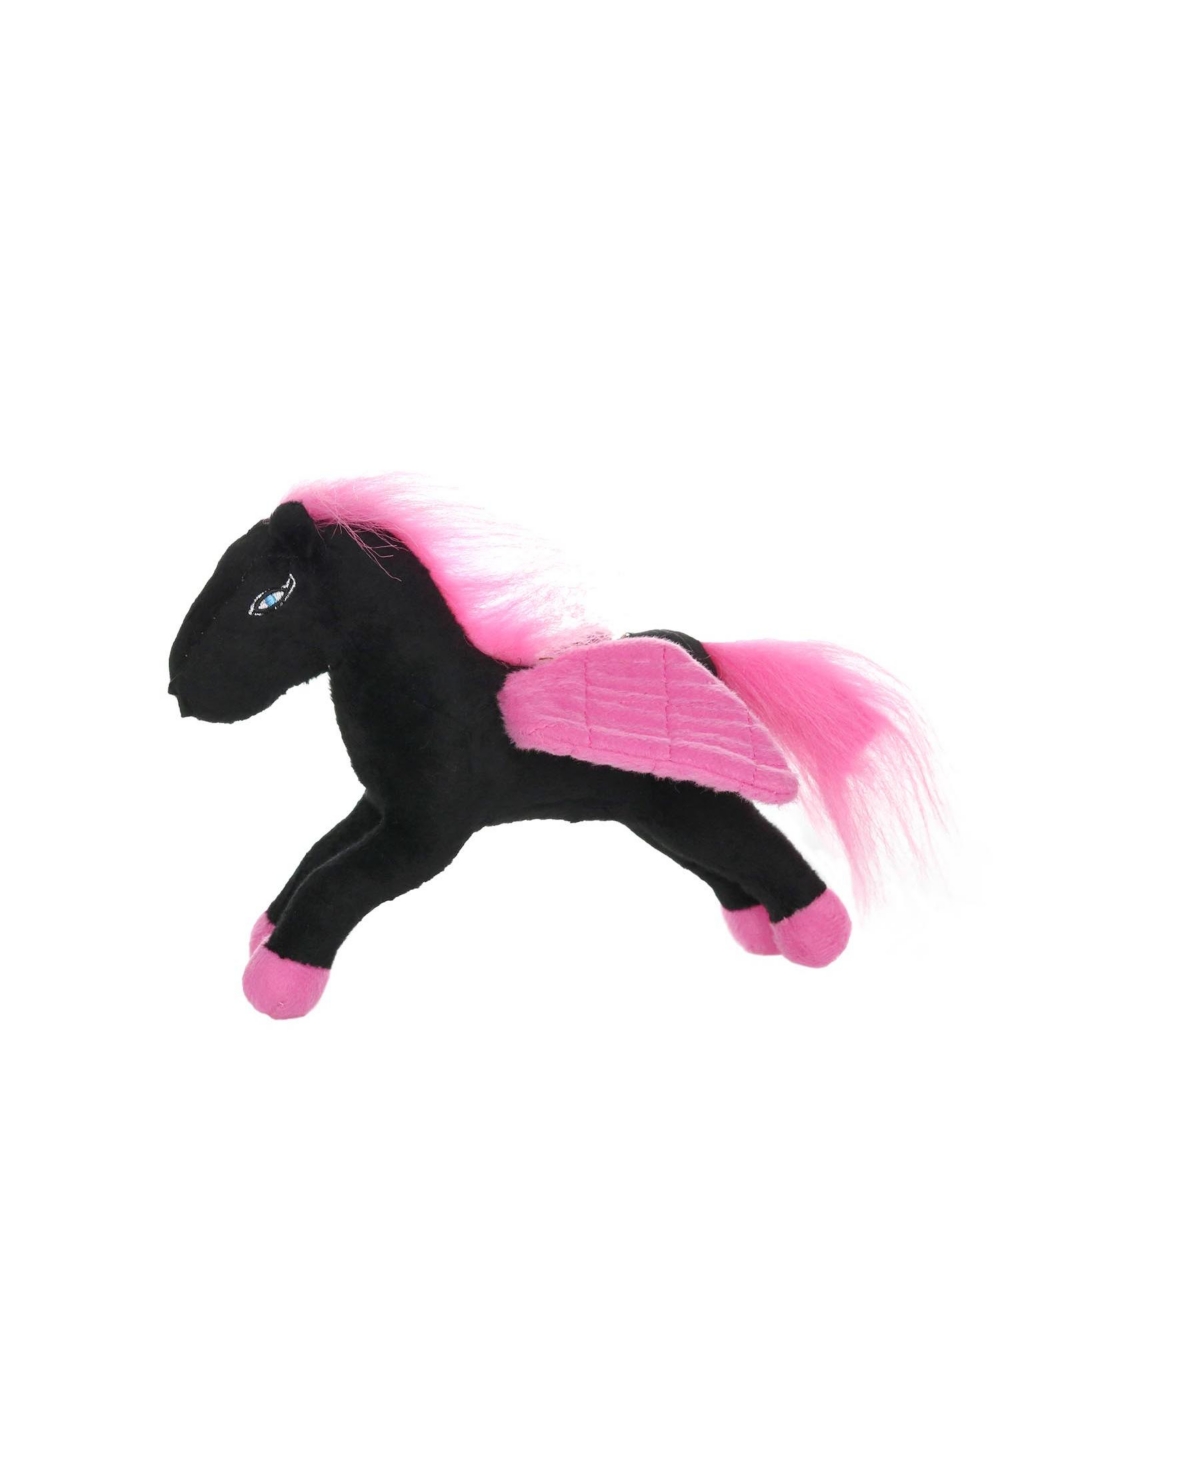 Jr Liar Pegasus Black Pink, Dog Toy - Black